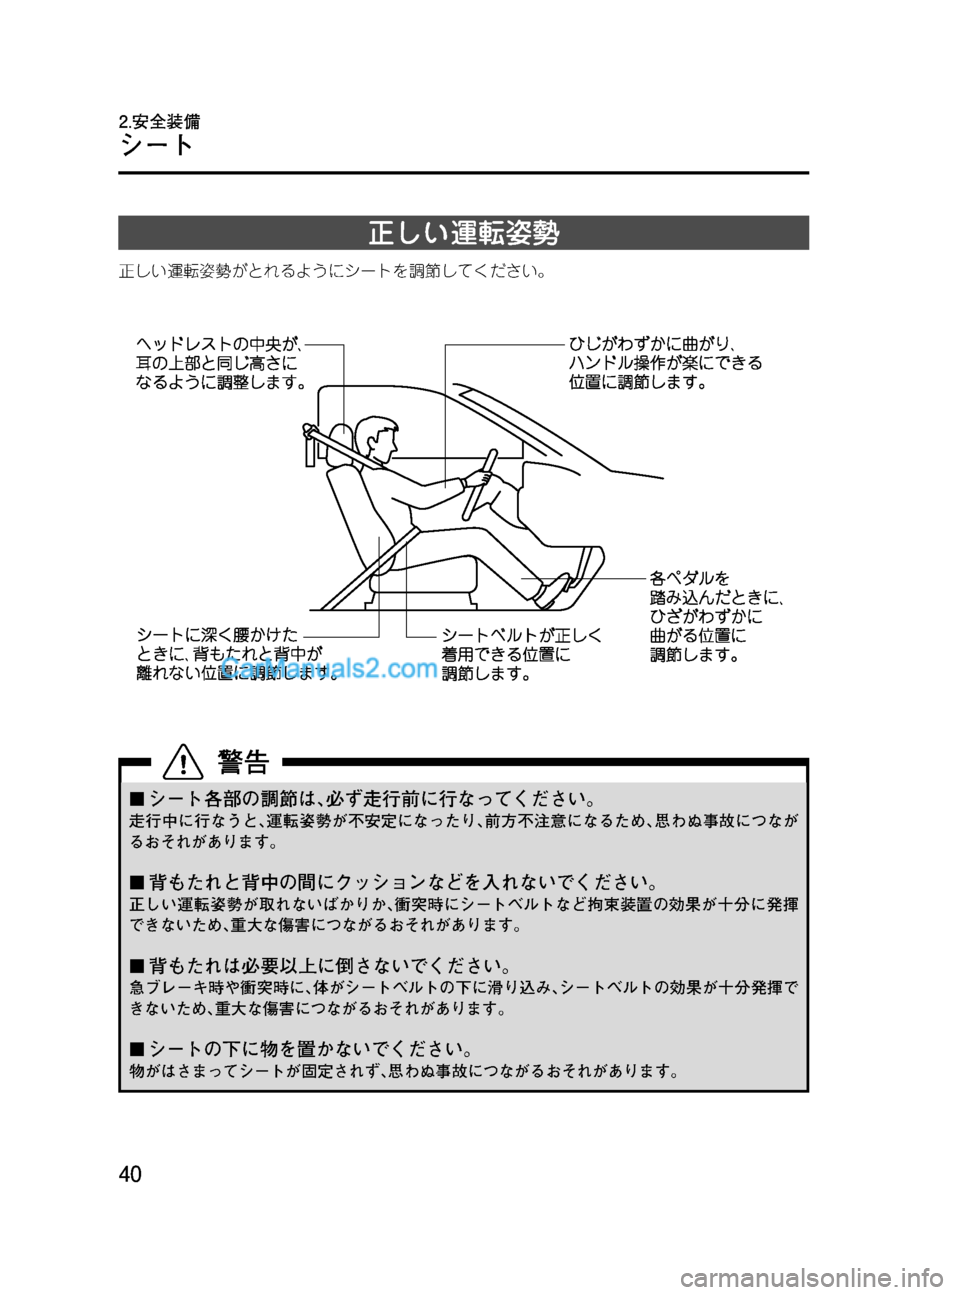 MAZDA MODEL VERISA 2007  ベリーサ｜取扱説明書 (in Japanese) Black plate (40,1)
正しい運転姿勢
正しい運転姿勢がとれるようにシートを調節してください。
¢シート各部の調節は､必ず走行前に行なってください。